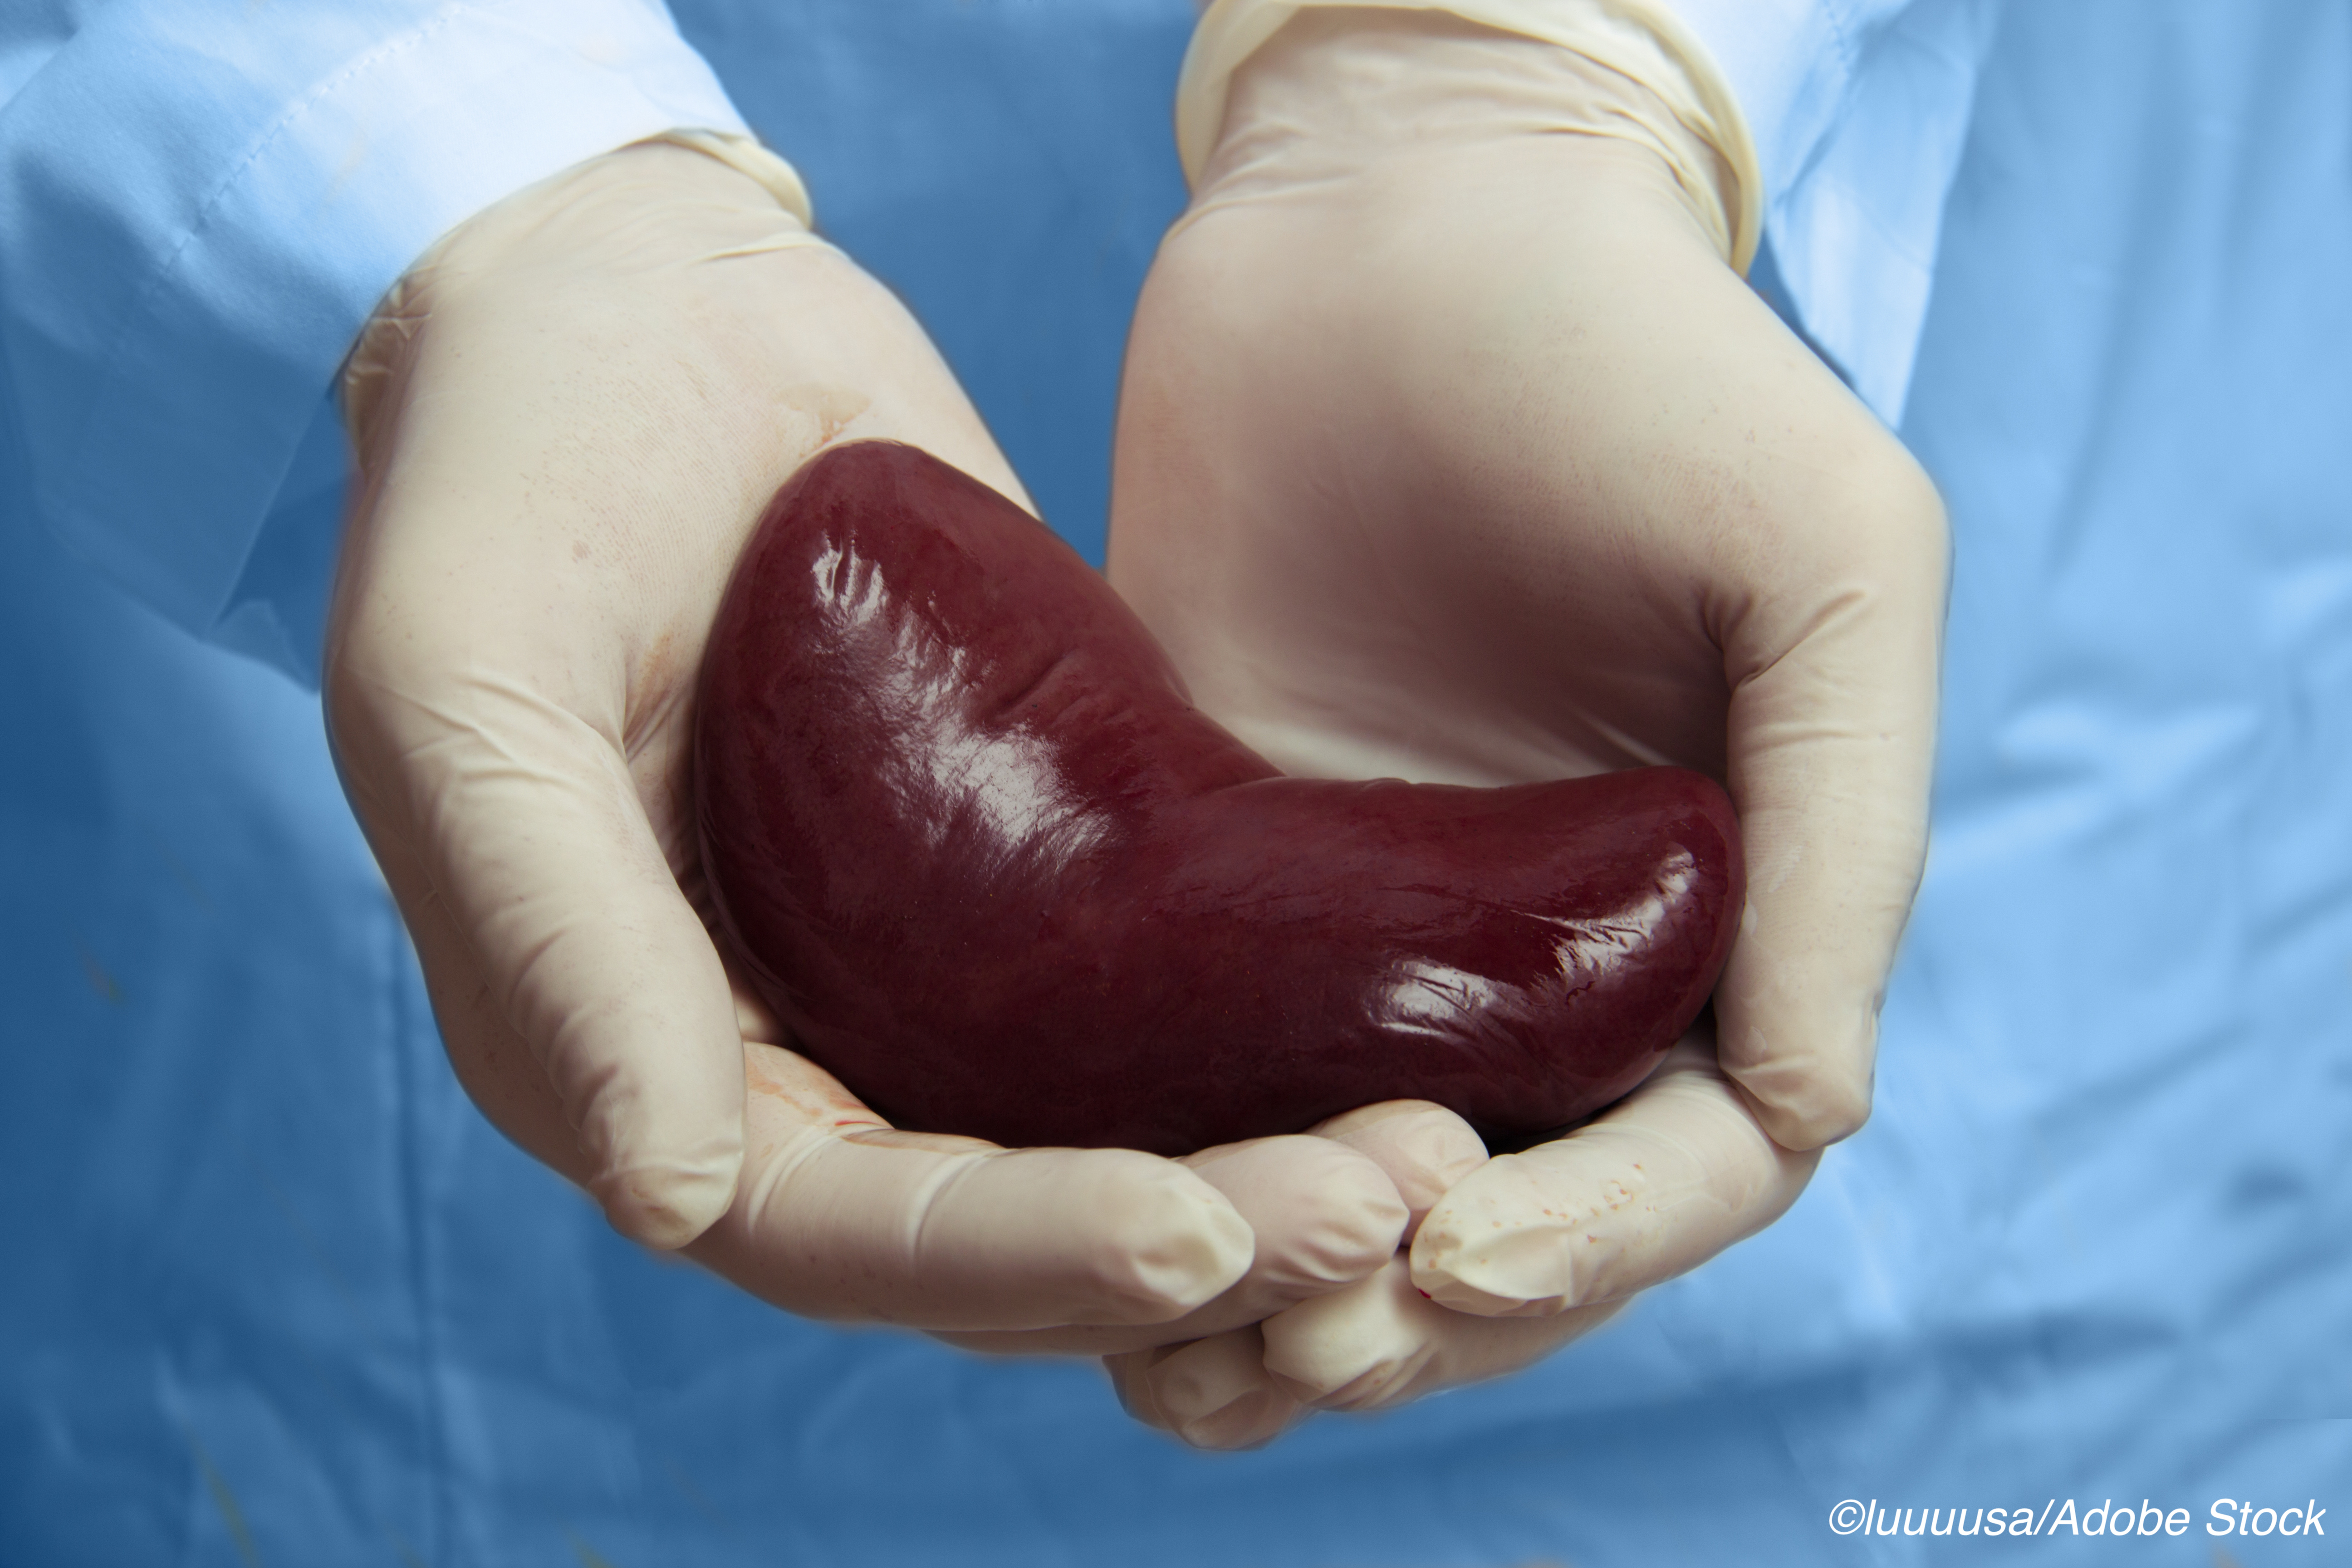 Oxygen Delivered During Donor Kidney Preservation is Easy, Safe, Adds Minimal Cost